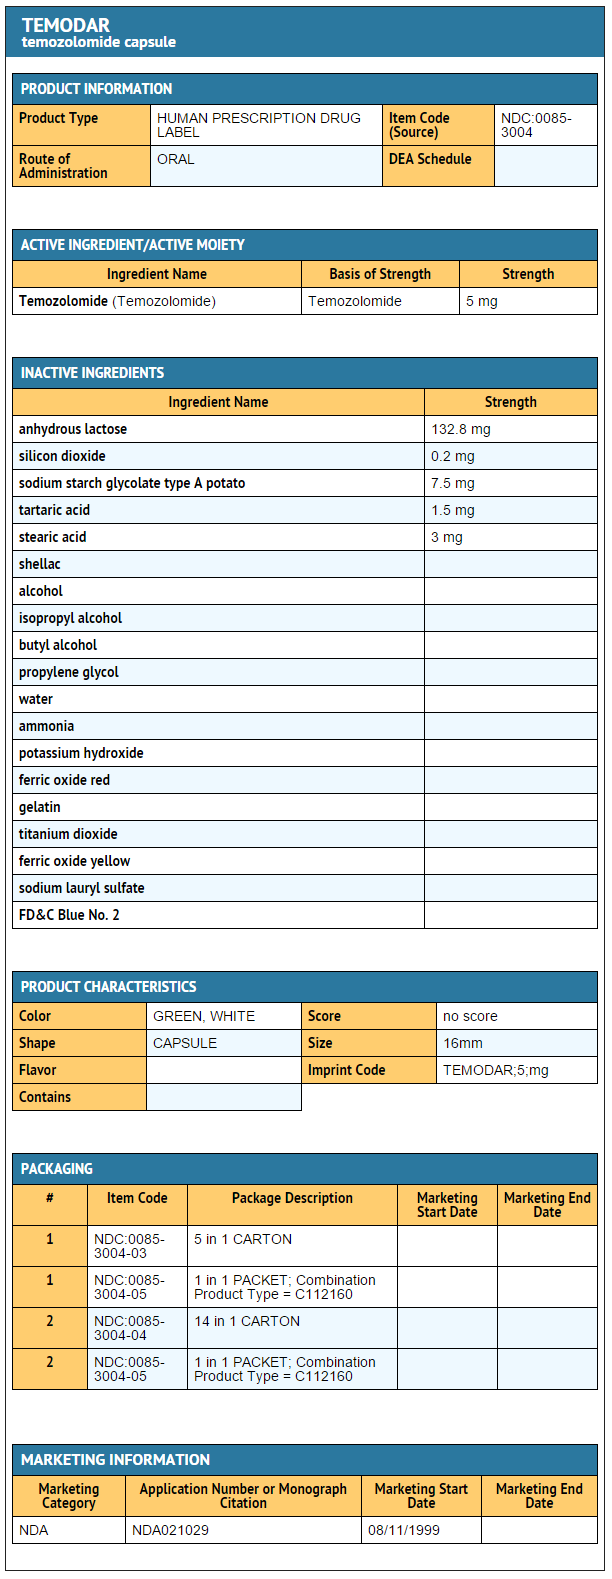 File:Temozolomide capsule 5mg FDA package label.png